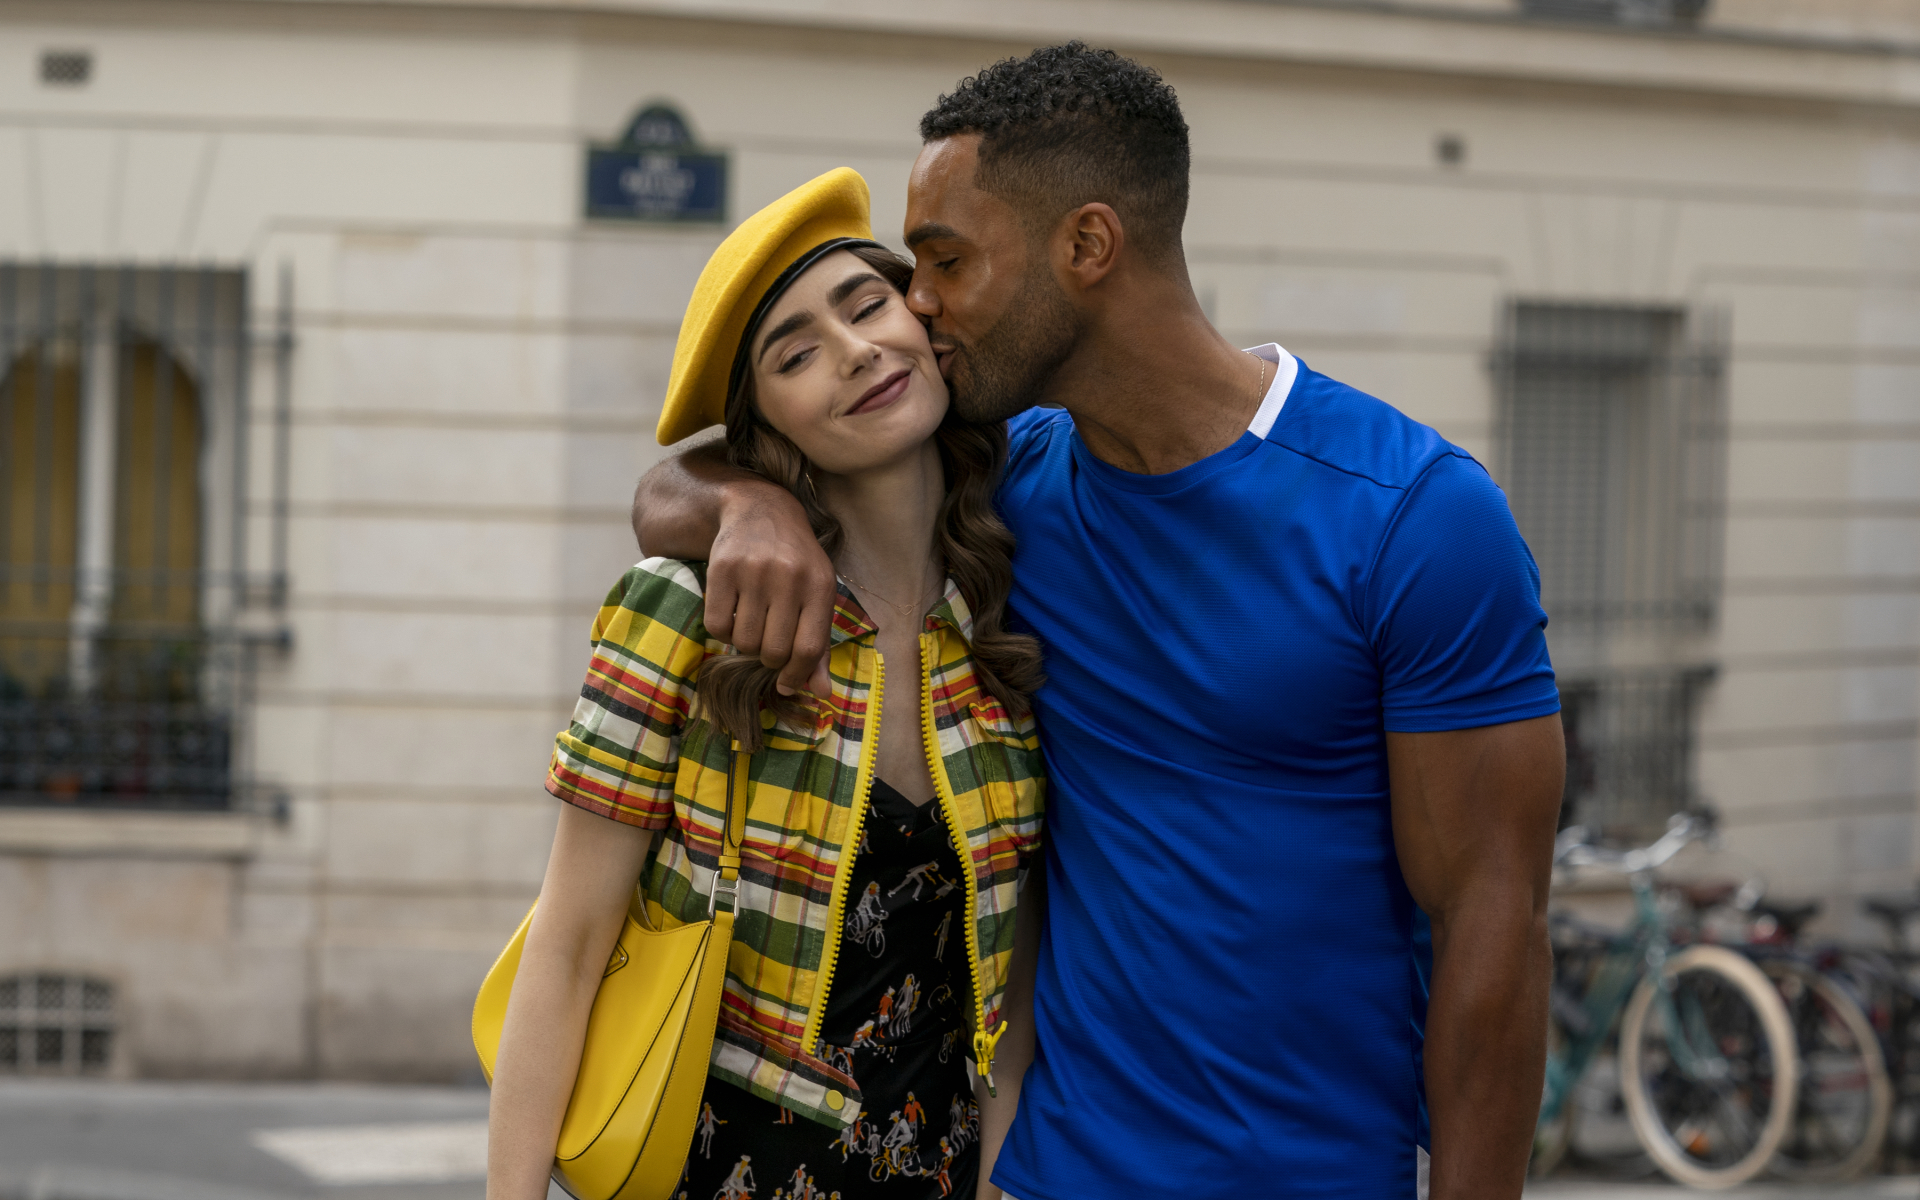 Emily w Paryzu (Emily in Paris) Serial 2020 021 Lily Collins jako Emily Cooper, Lucien Laviscount jako Alfie